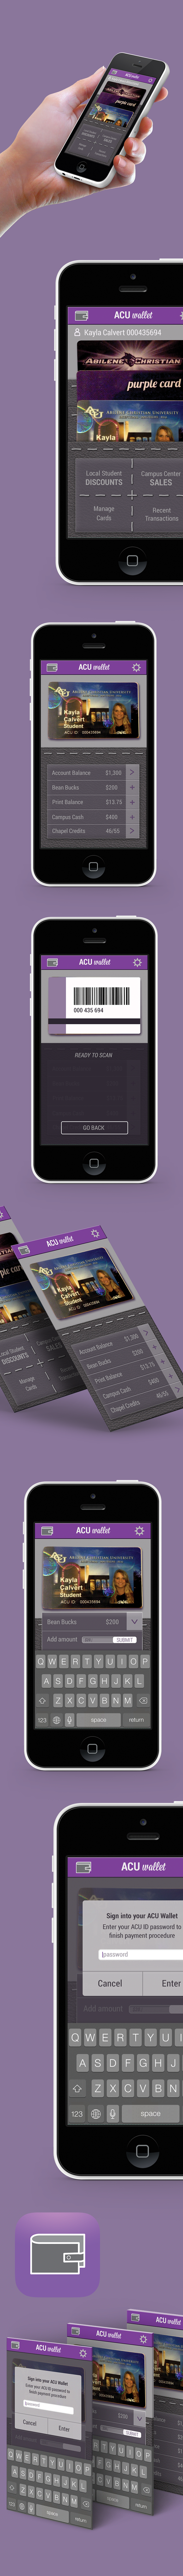 ACU app design purple Mobile ID mobile payment mobile Mobile Credit school id